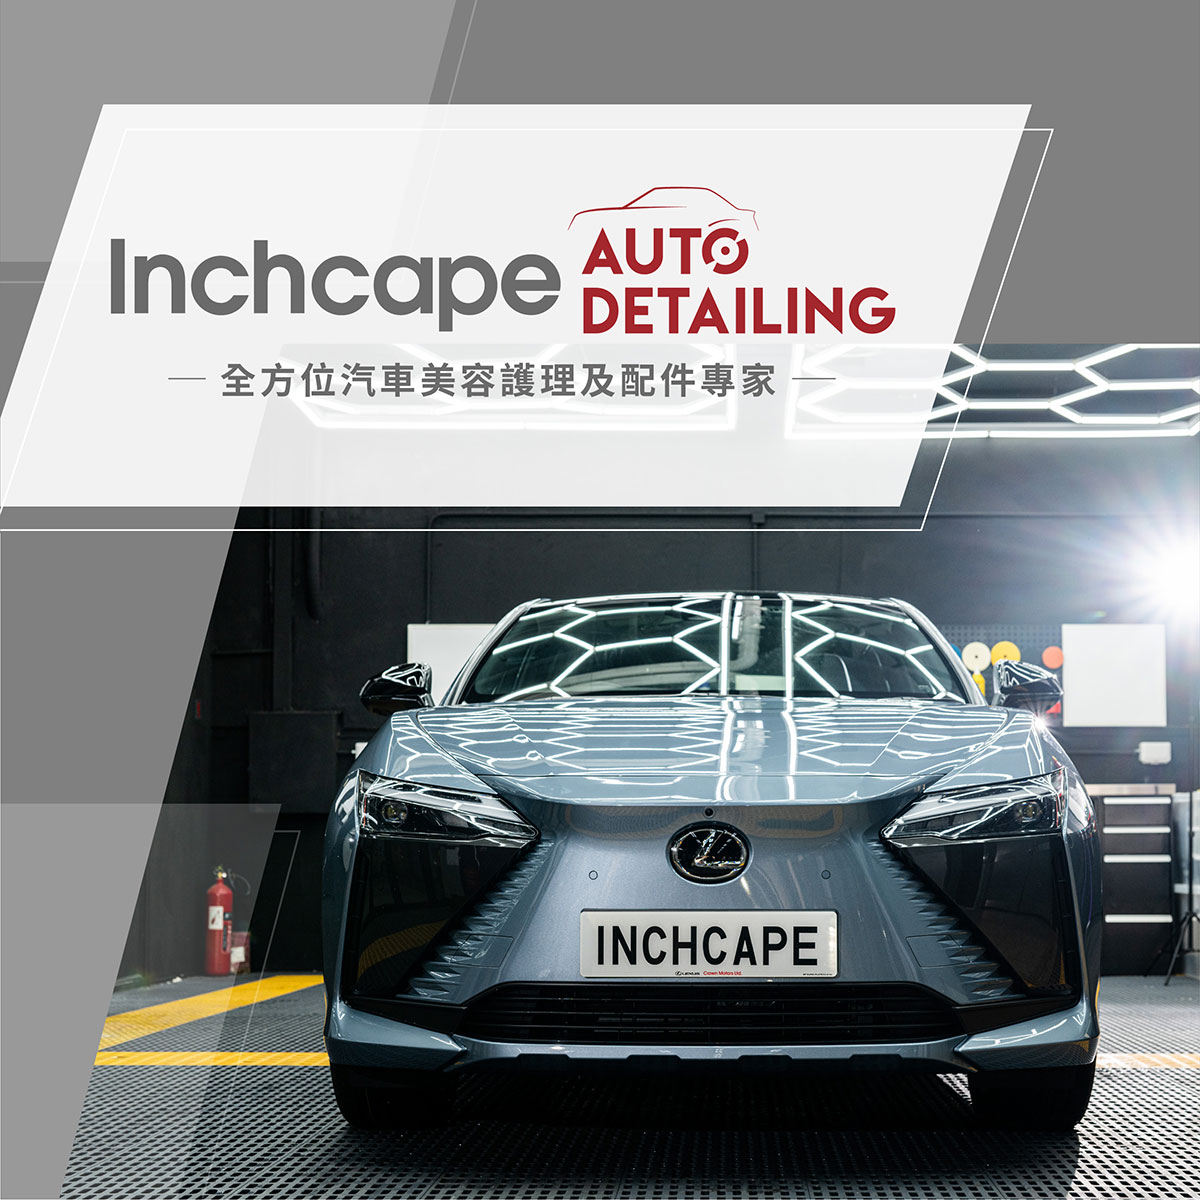 Inchcape Auto Detailing